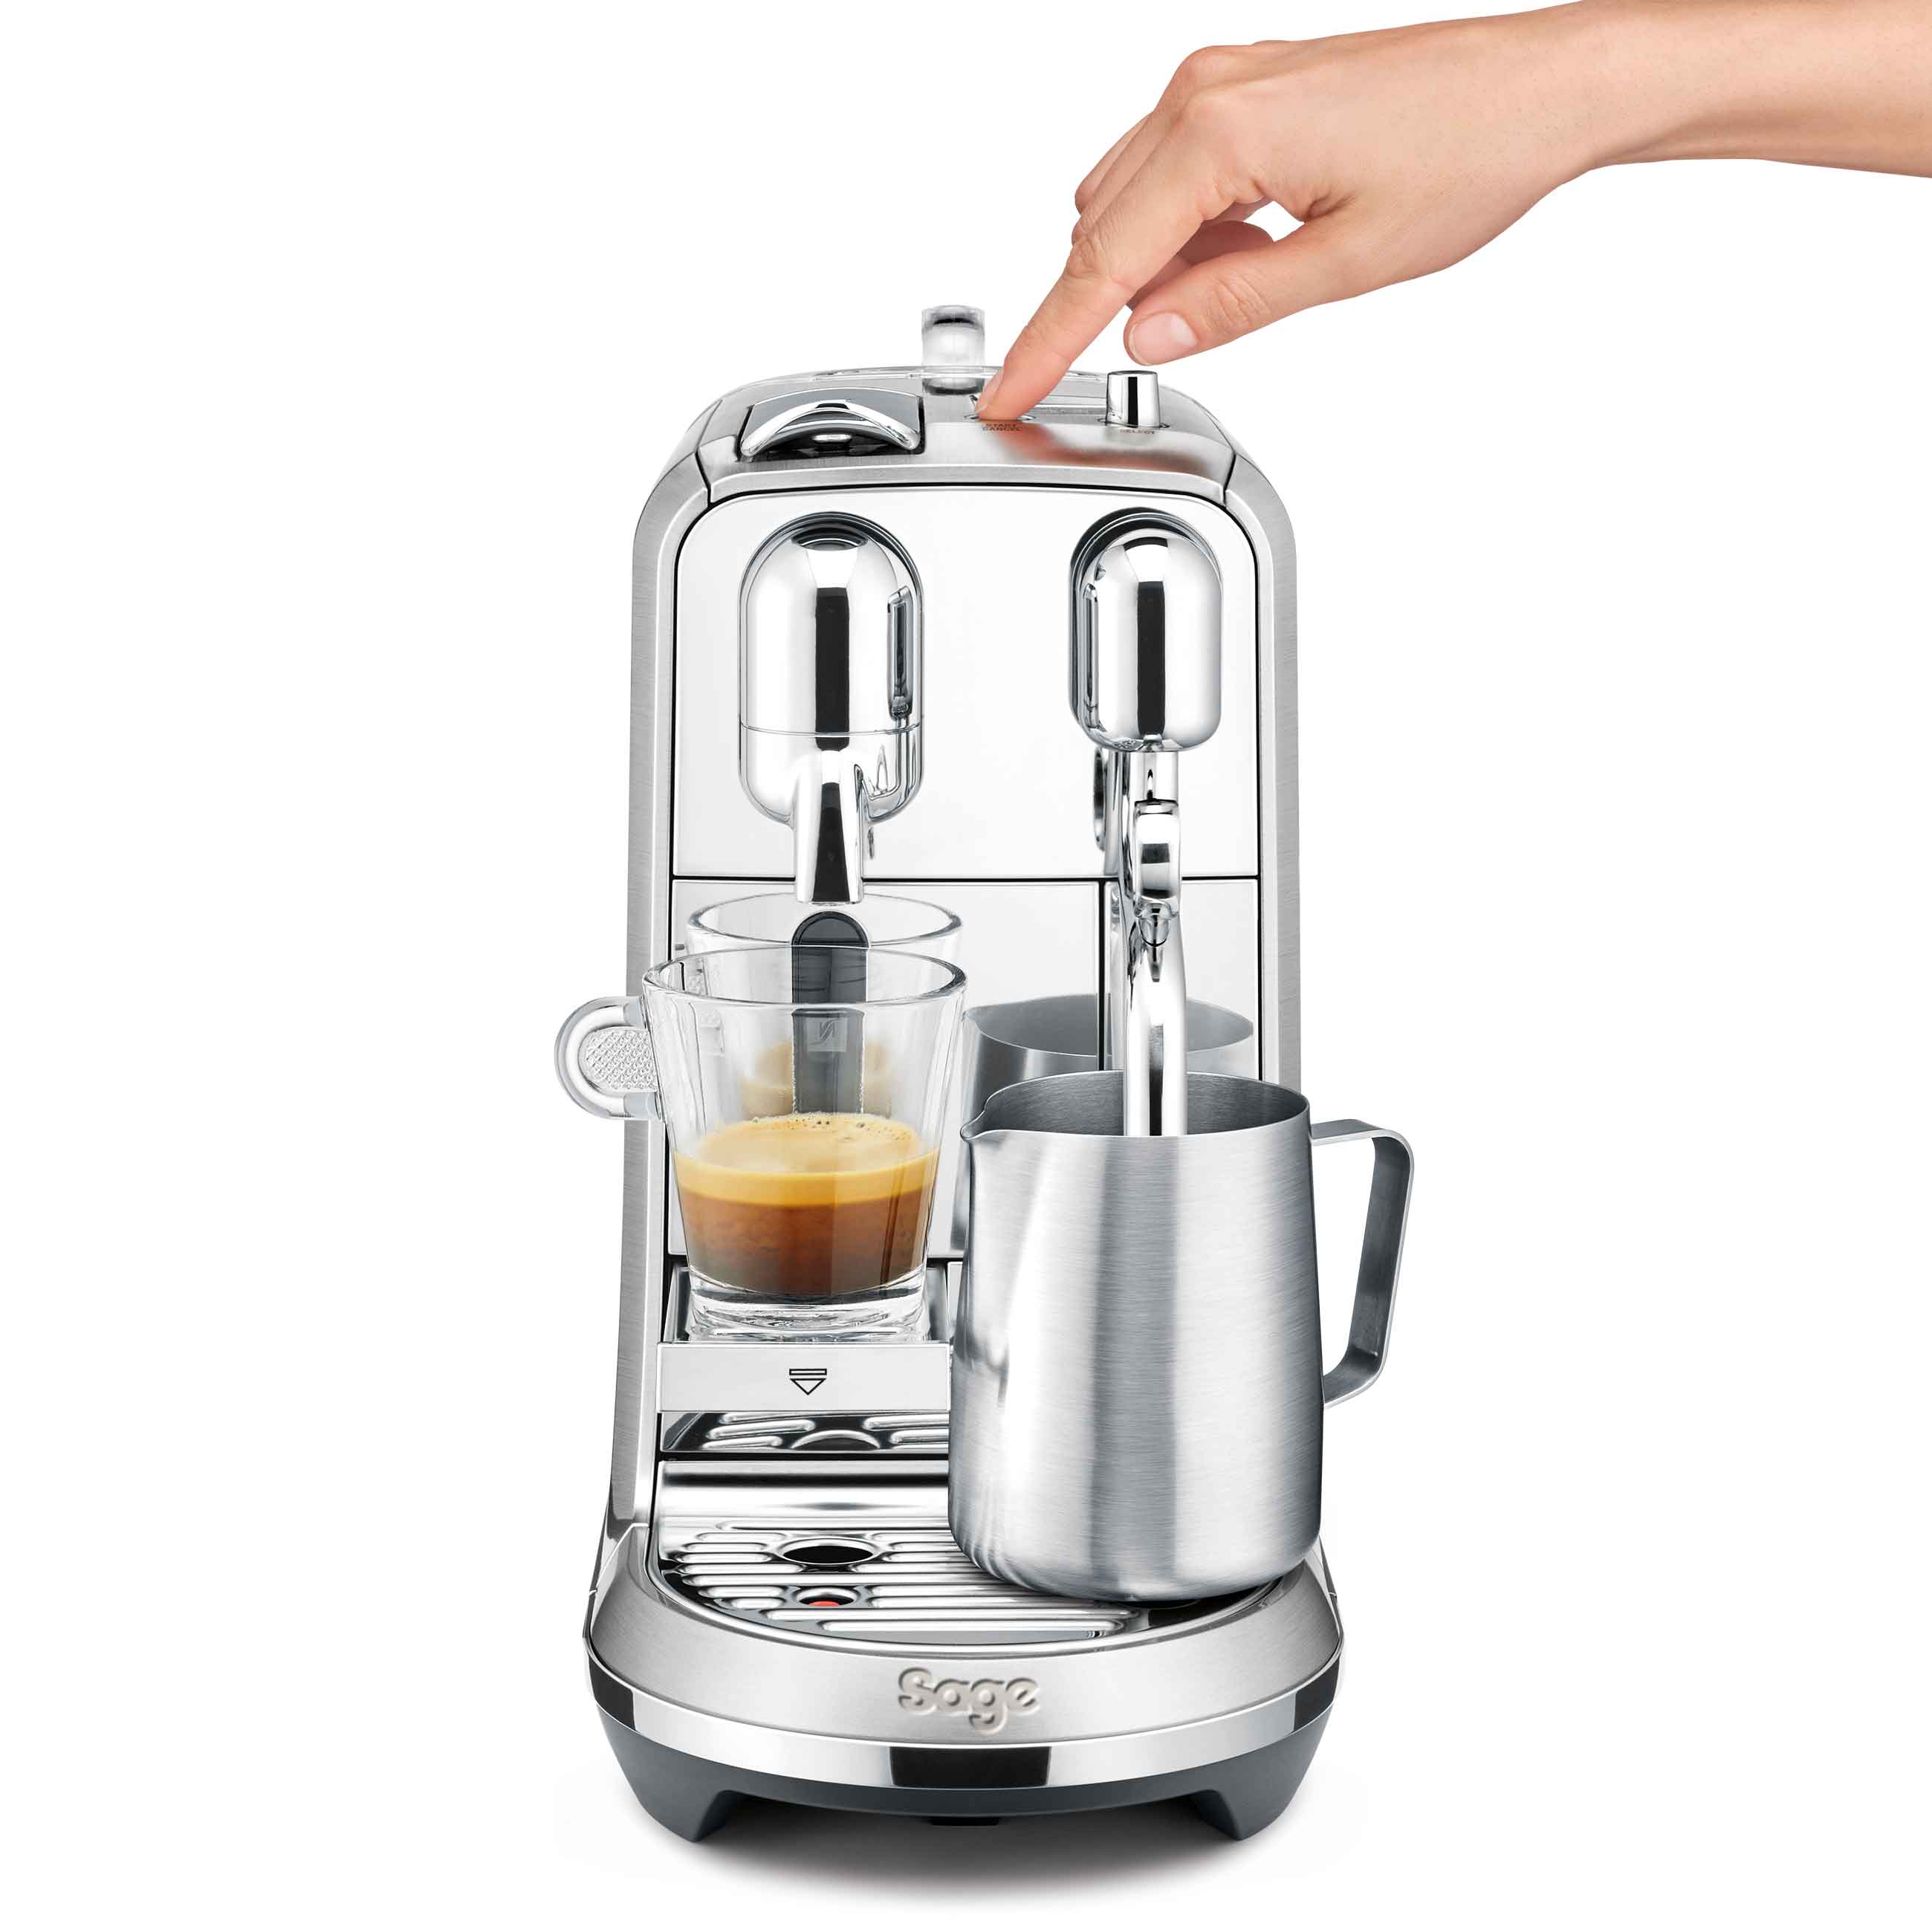  Creatista Plus Nespresso Machine in Brushed Stainless Steel with Milk Jug